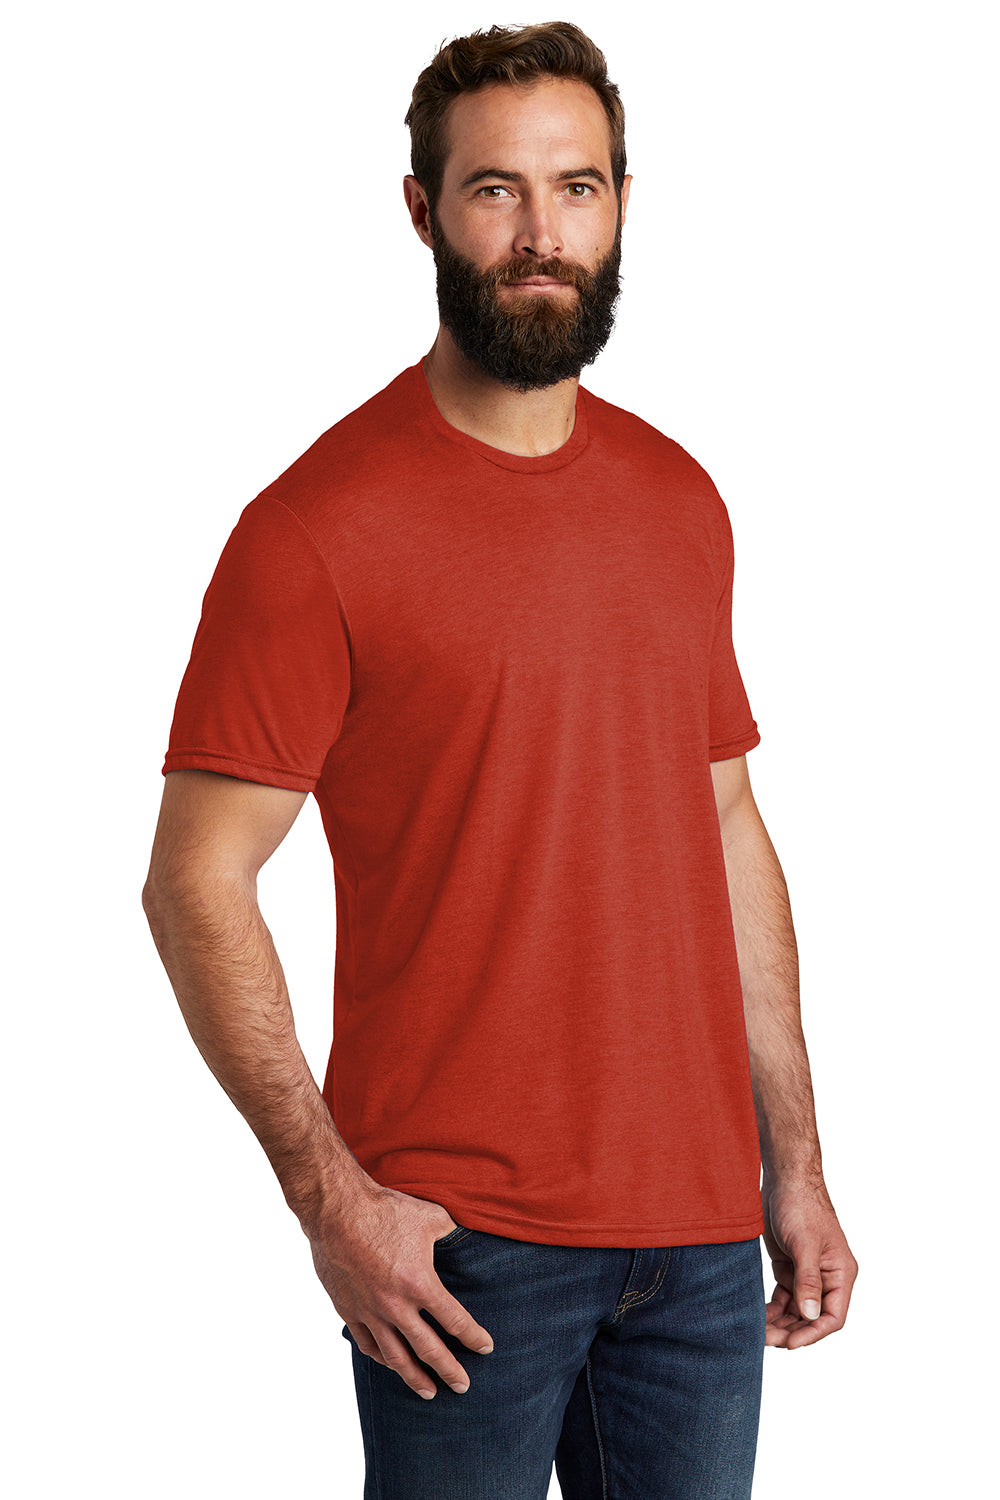 Allmade AL2004 Mens Short Sleeve Crewneck T-Shirt Desert Sun Red Model 3Q